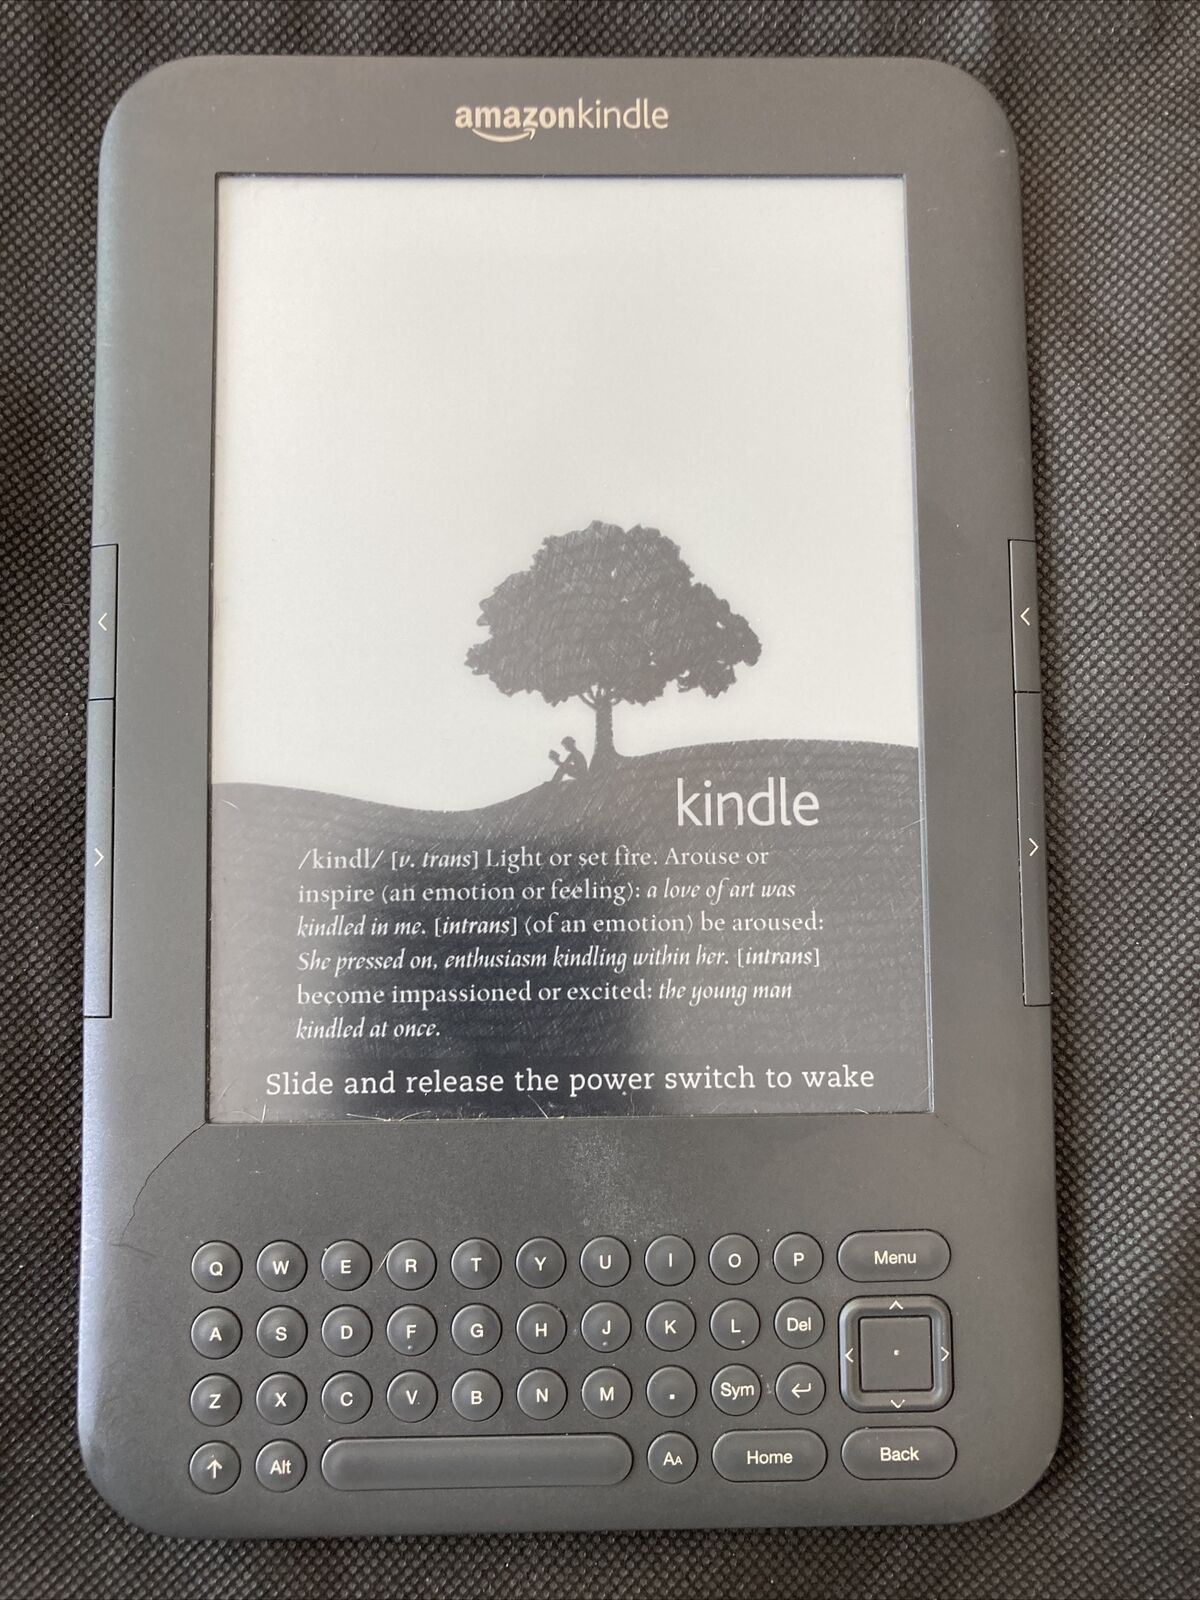 Amazon Kindle Keyboard (3rd Generation), Wi-Fi/3G